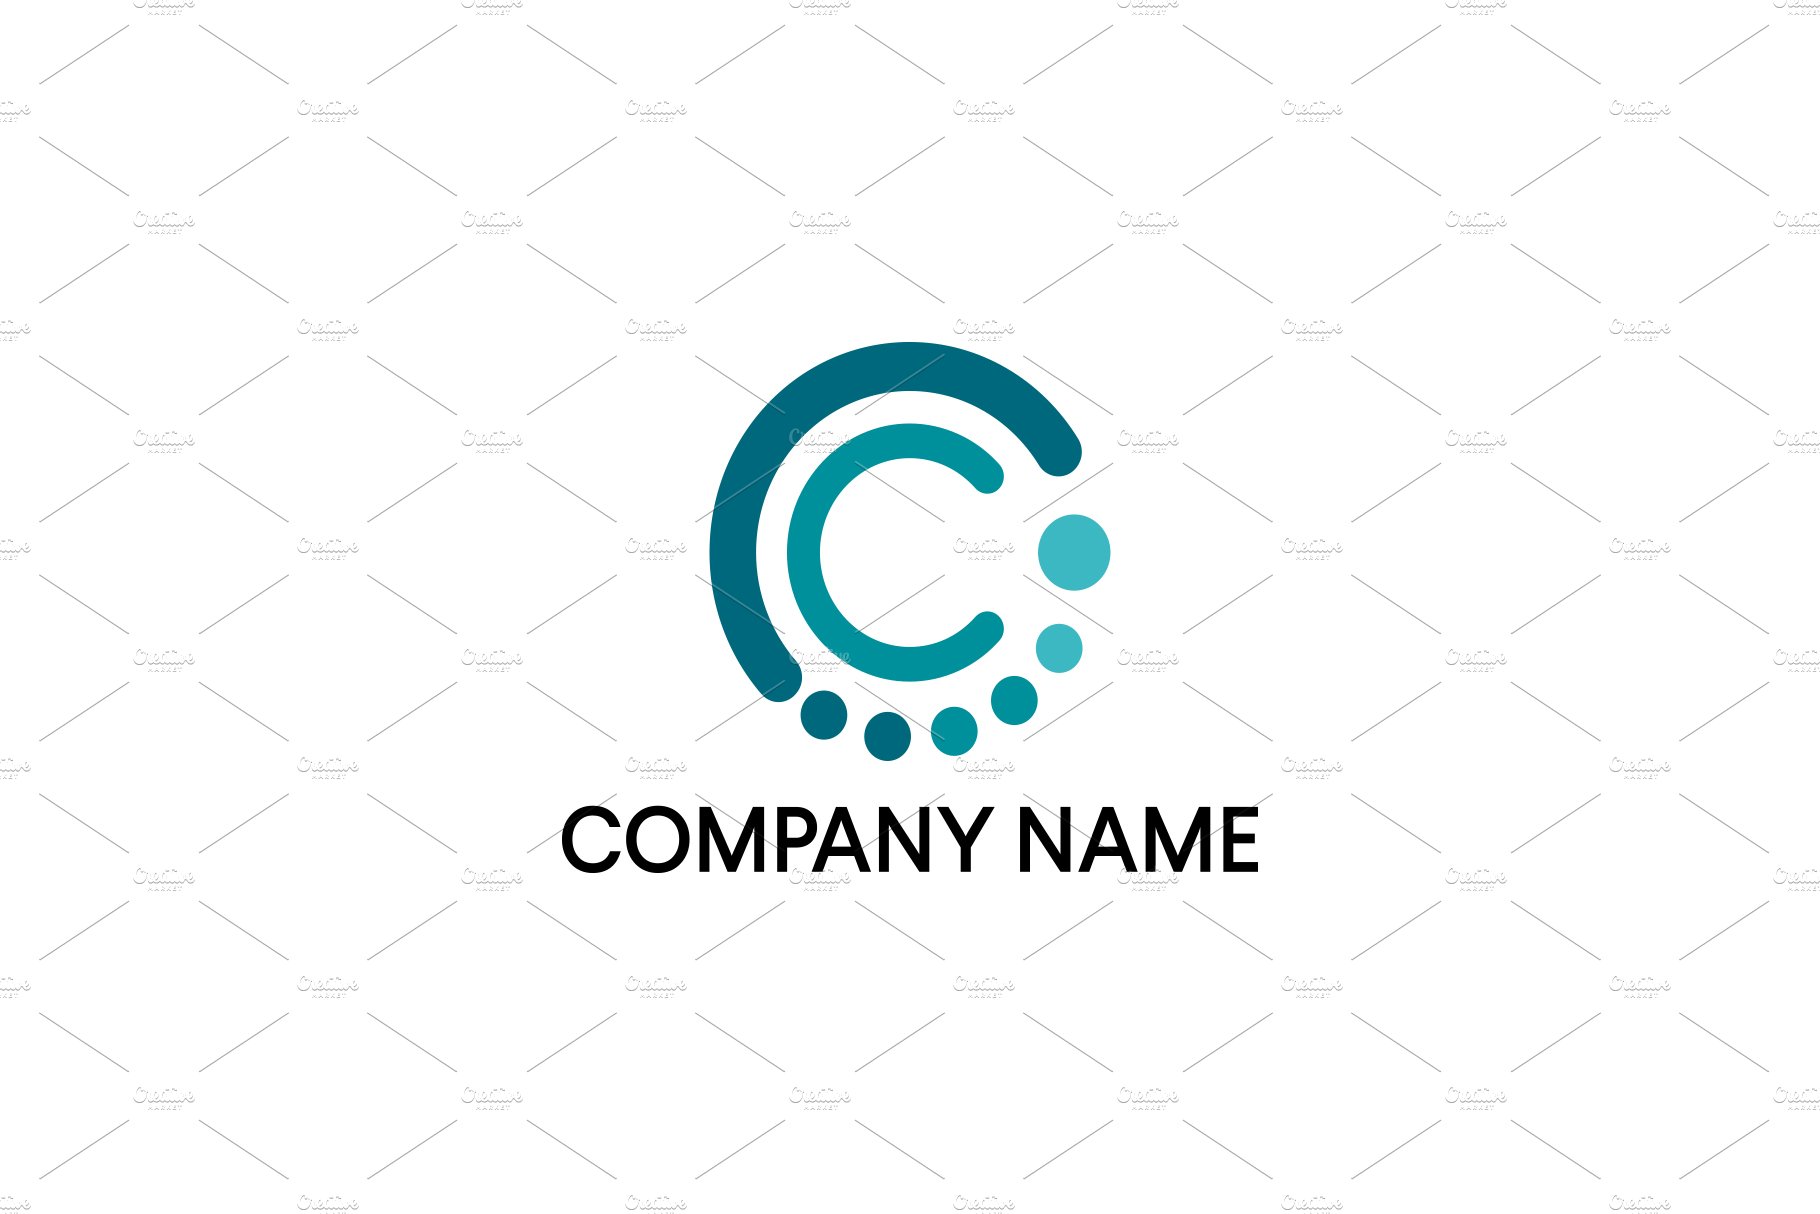 Letter C logo design cover image.